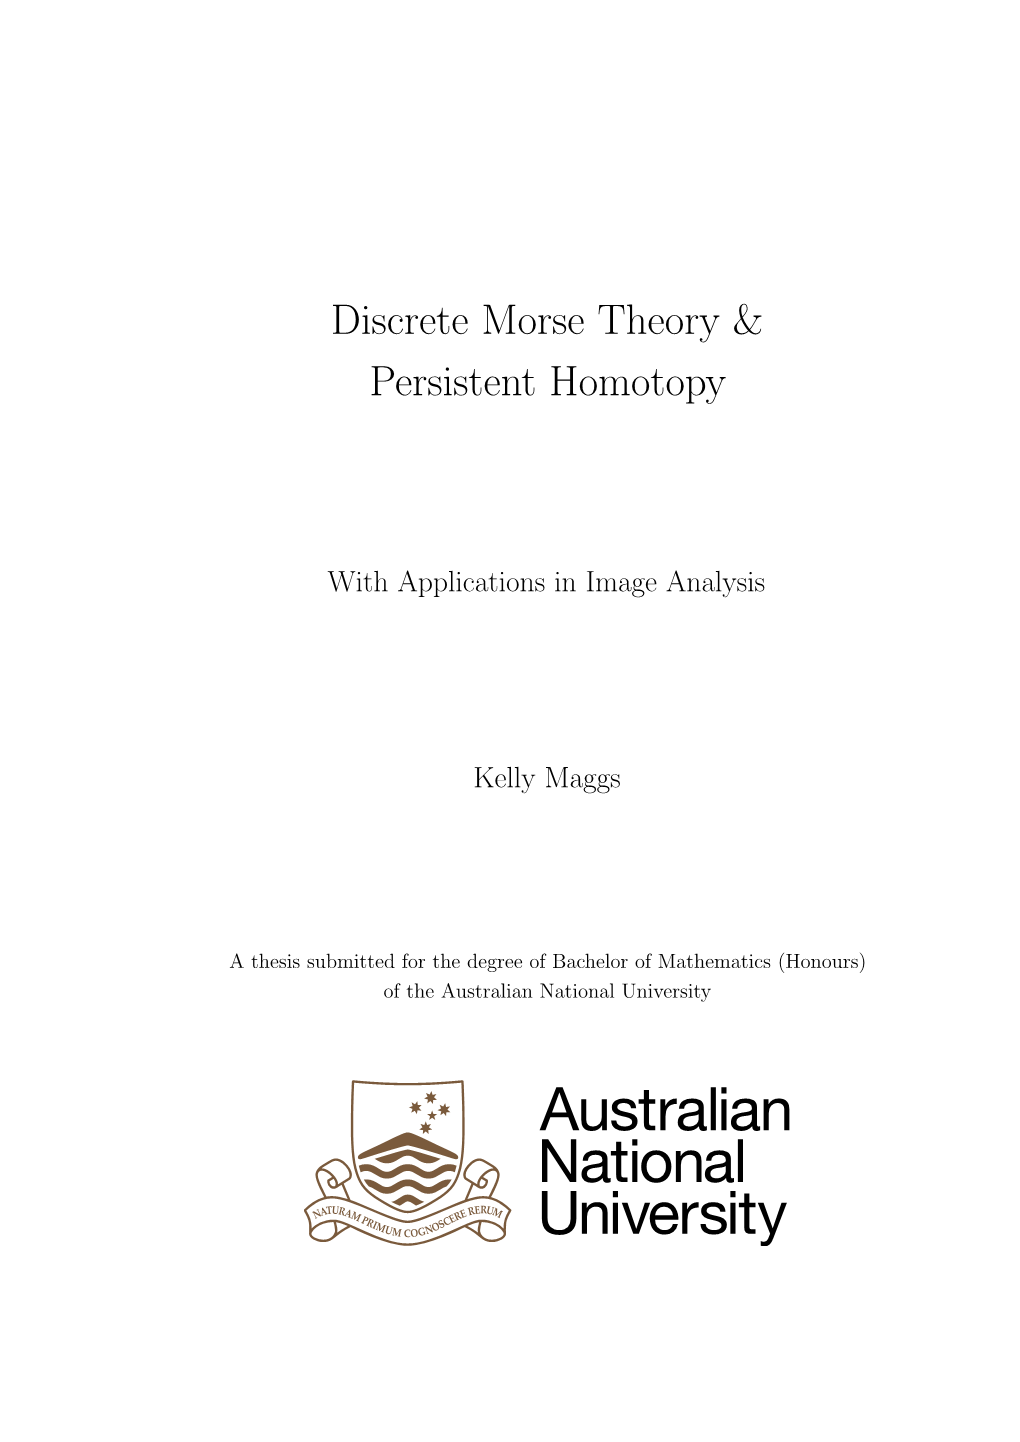 Discrete Morse Theory & Persistent Homotopy